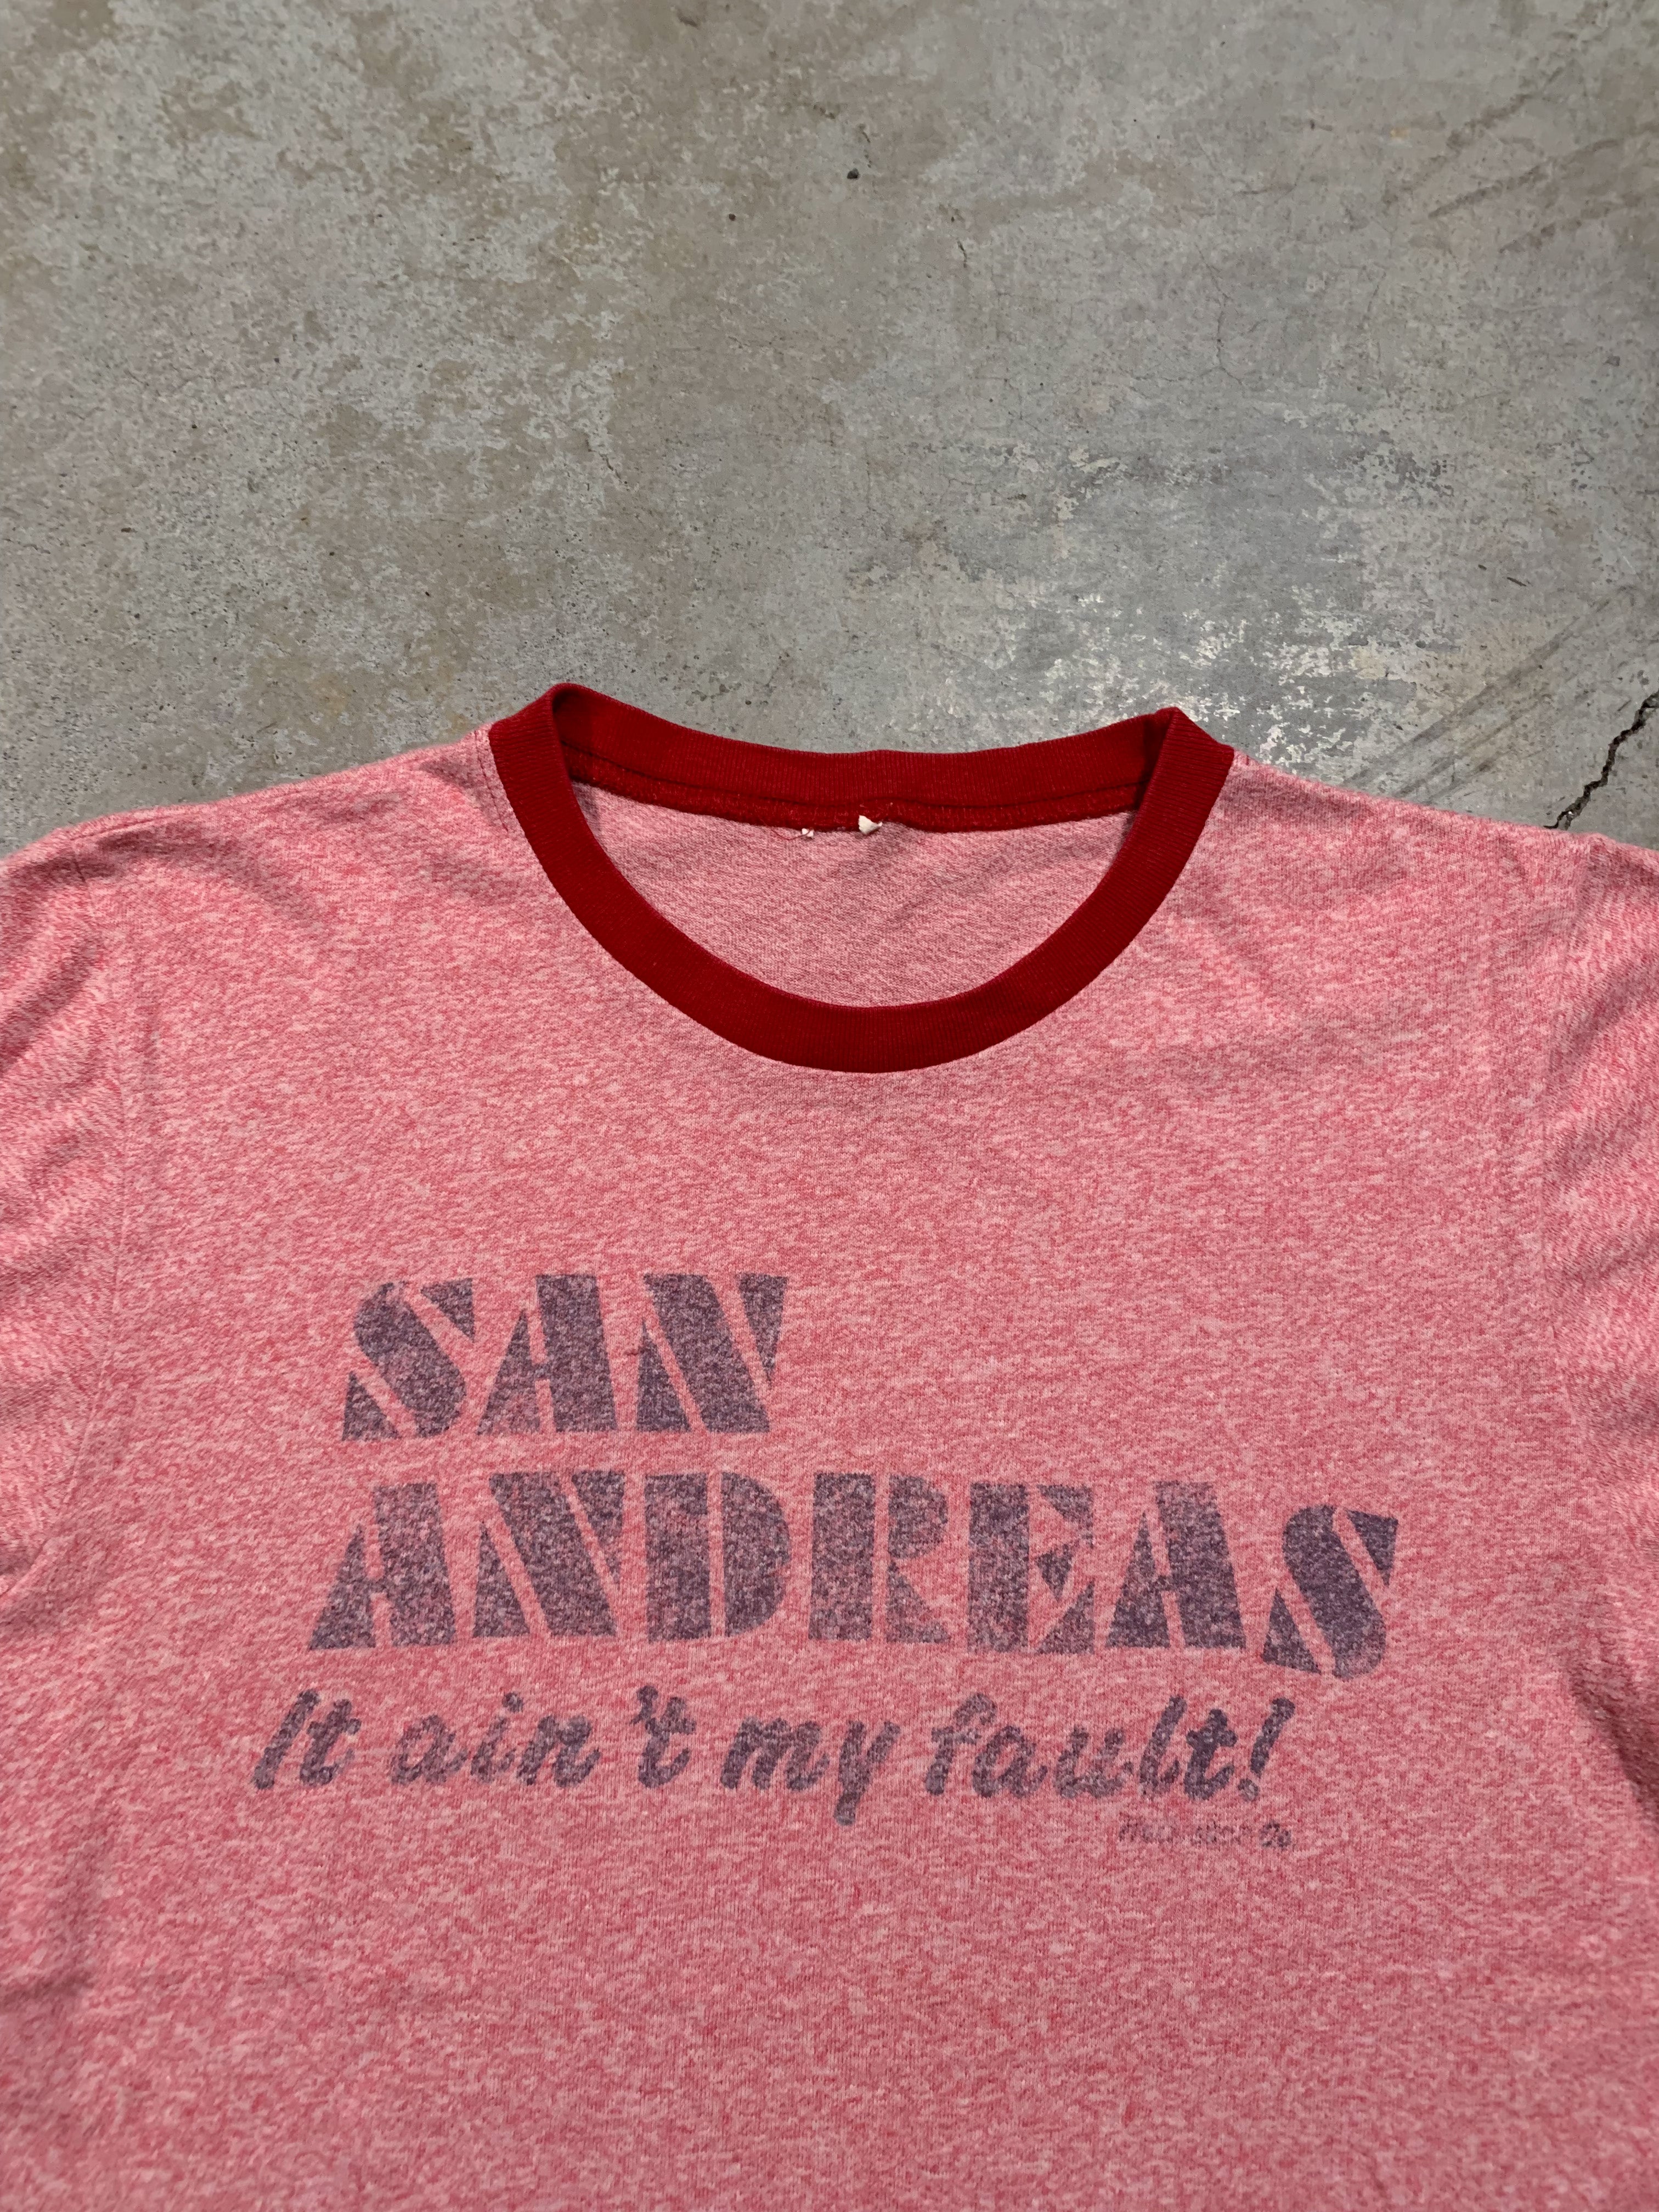 1980s “San Andreas Fault” Ringer Shirt [S]